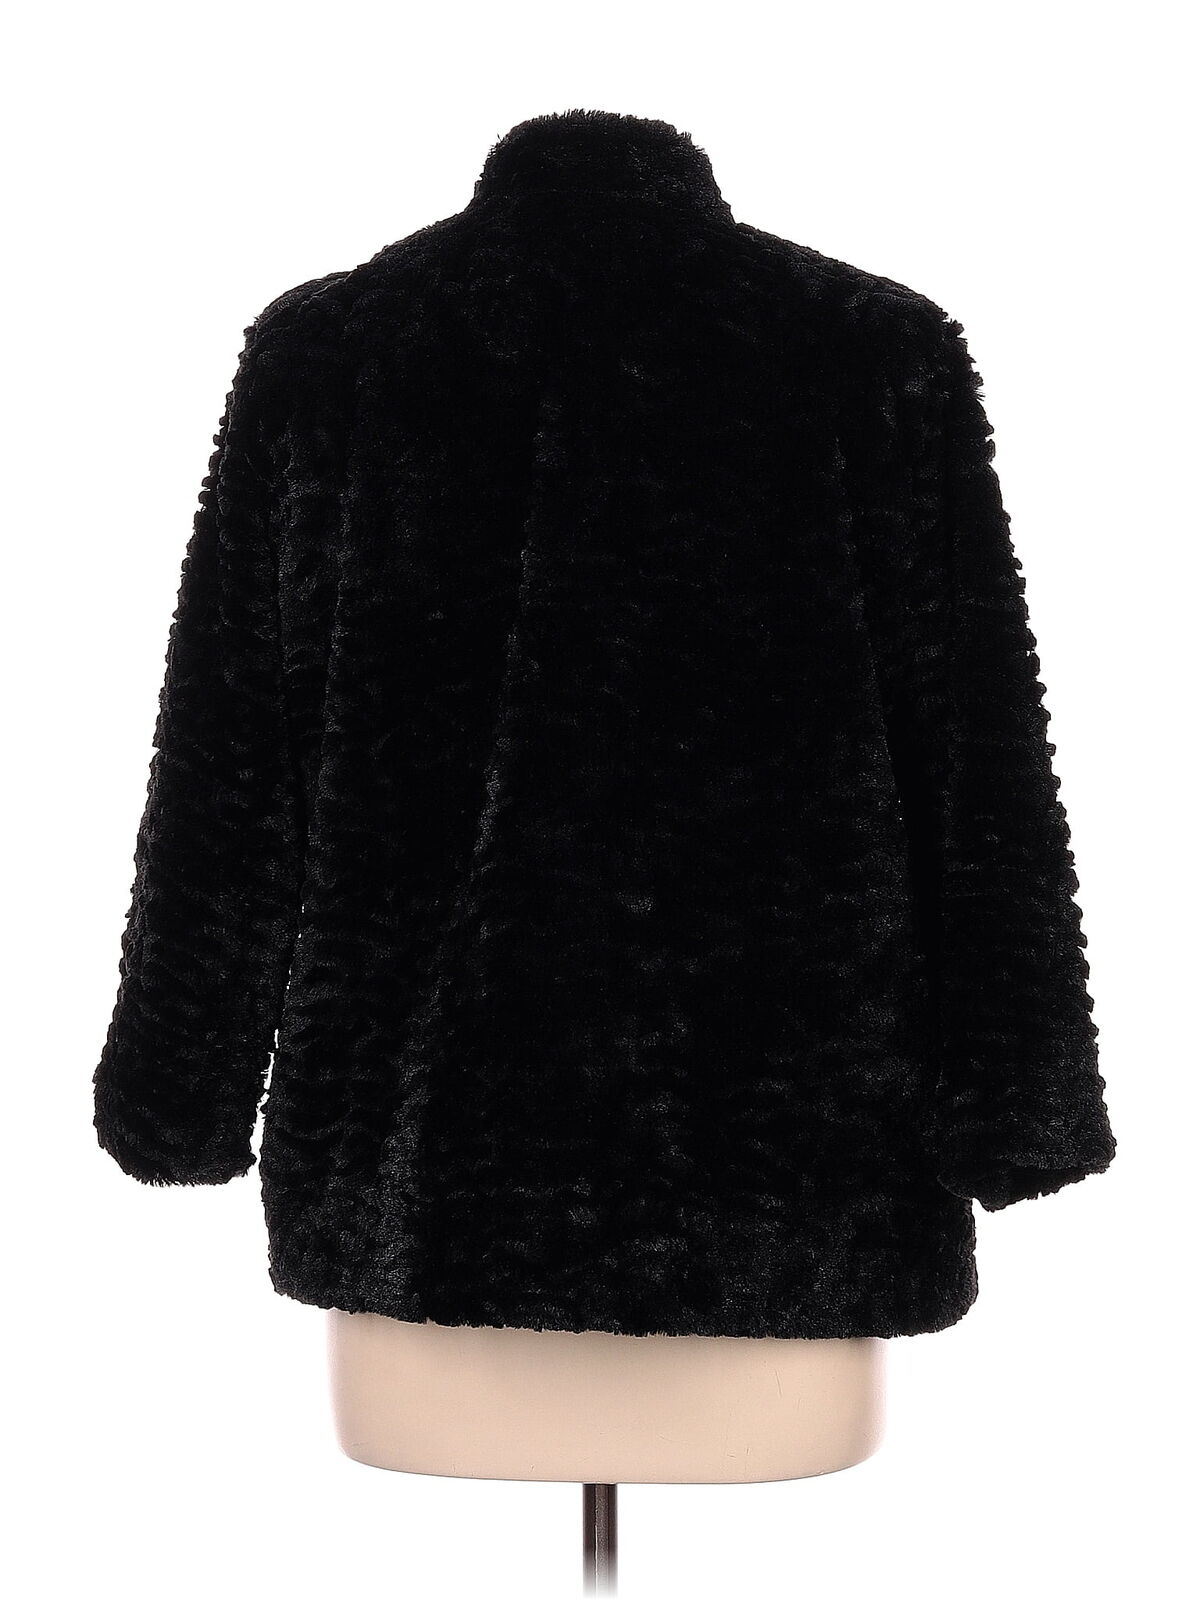 Alfred Dunner Women Black Faux Fur Jacket 12 - image 2